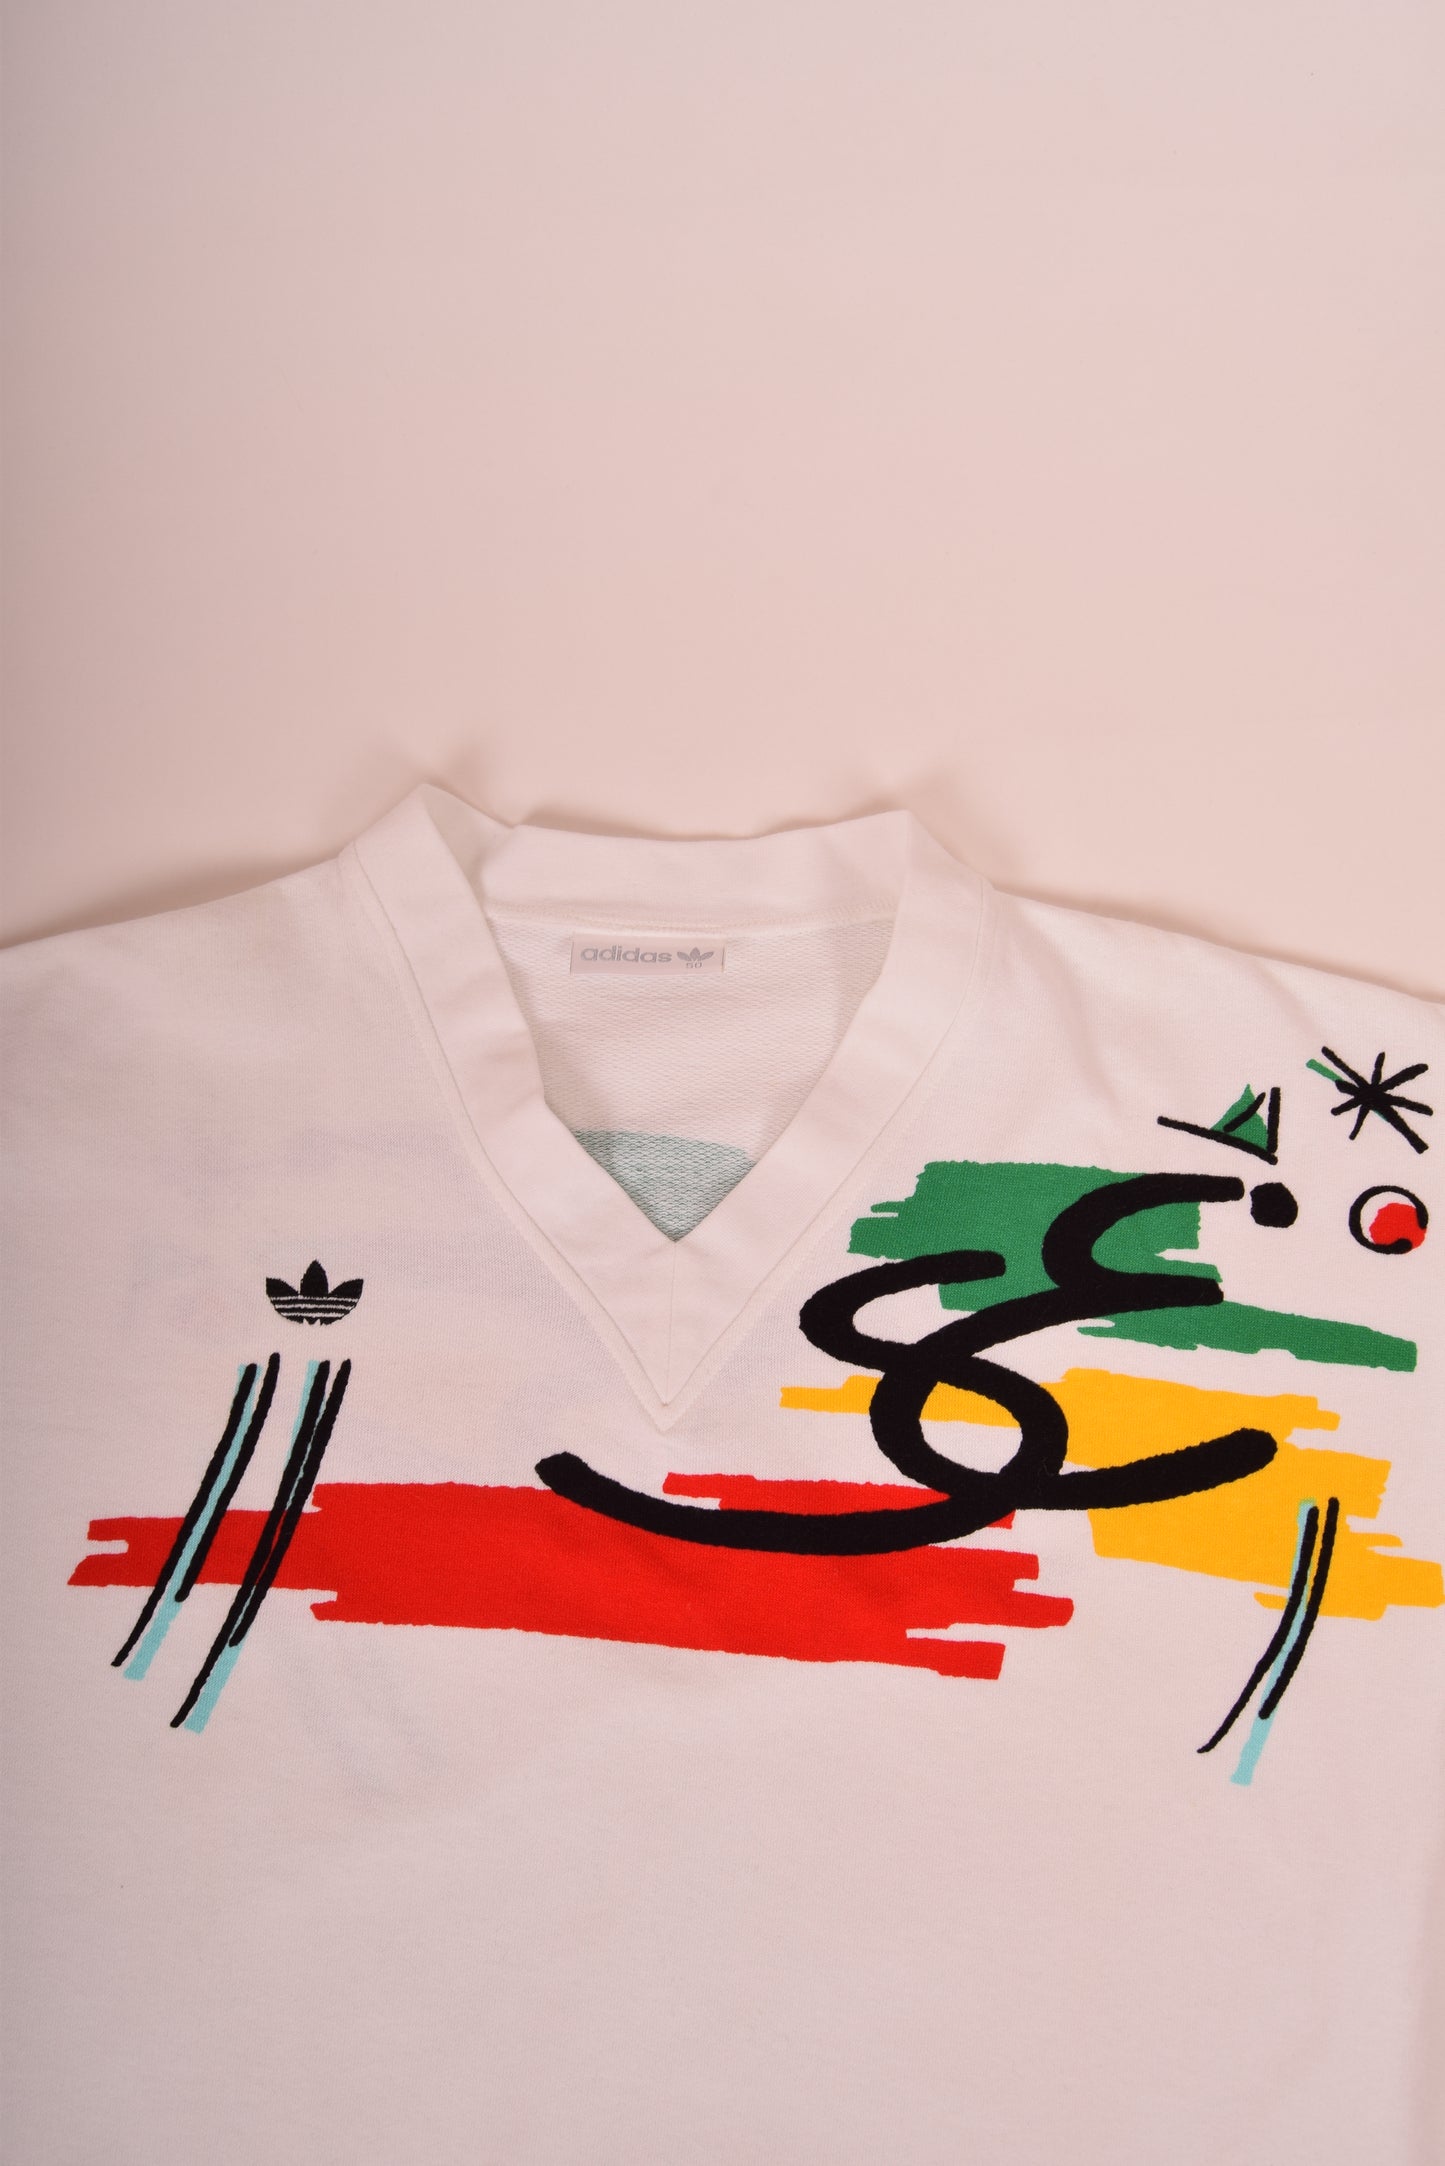 Vintage Adidas Stefan Edberg Sweatshirt 80's Made in Yugoslavia Size M White